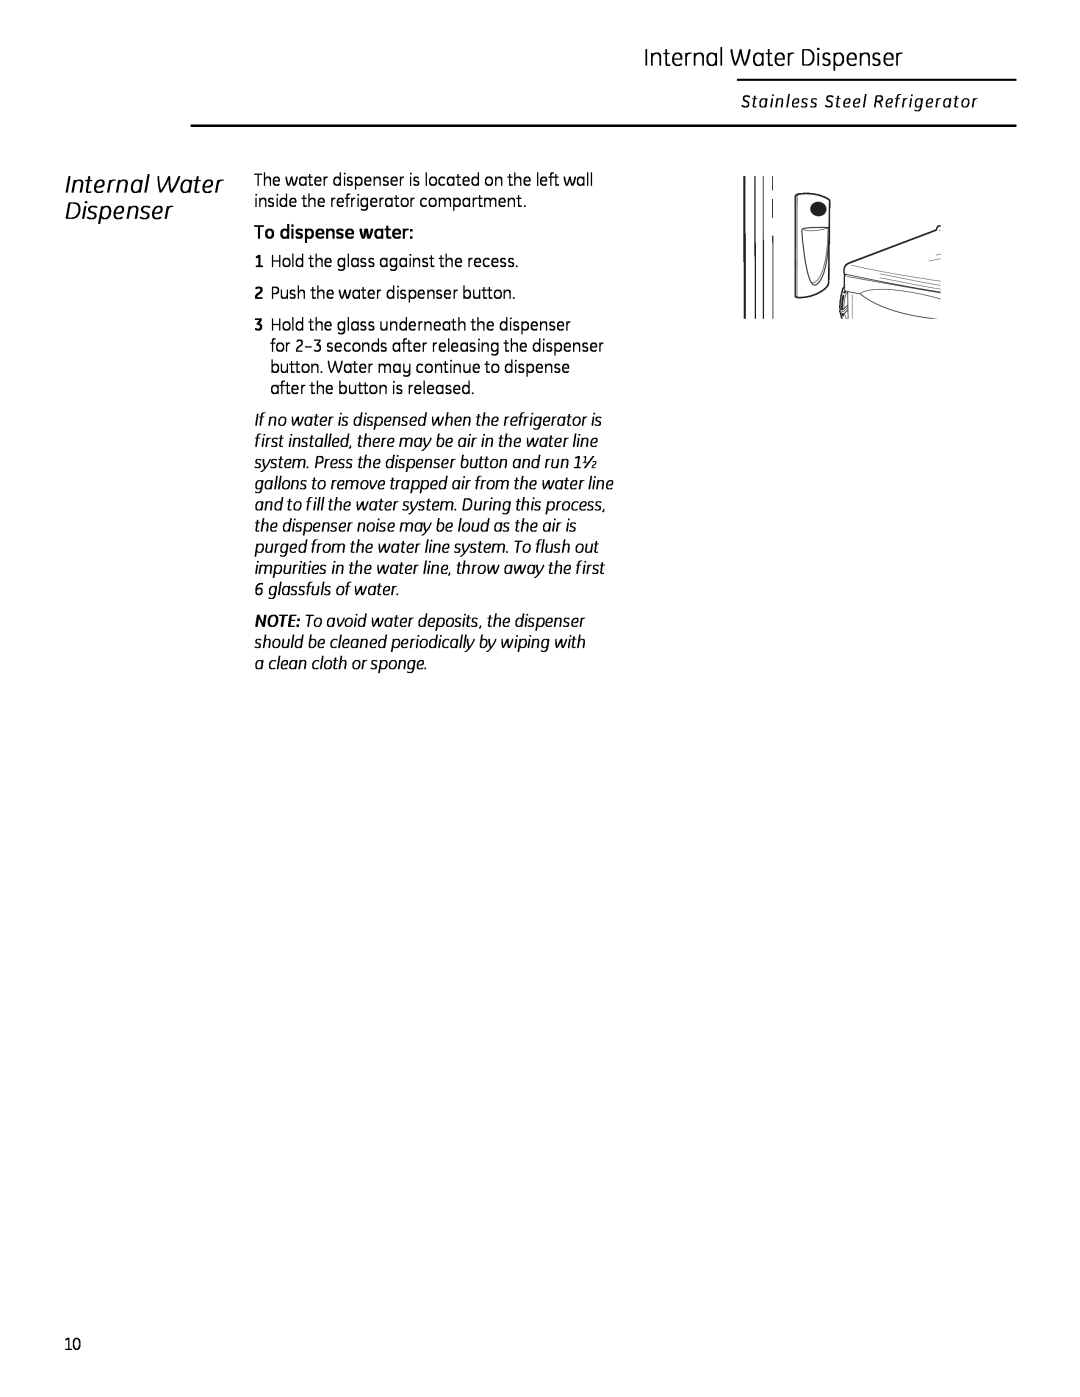 GE Monogram 225D1804P011 owner manual Internal Water Dispenser, To dispense water, Stainless Steel Refrigerator 